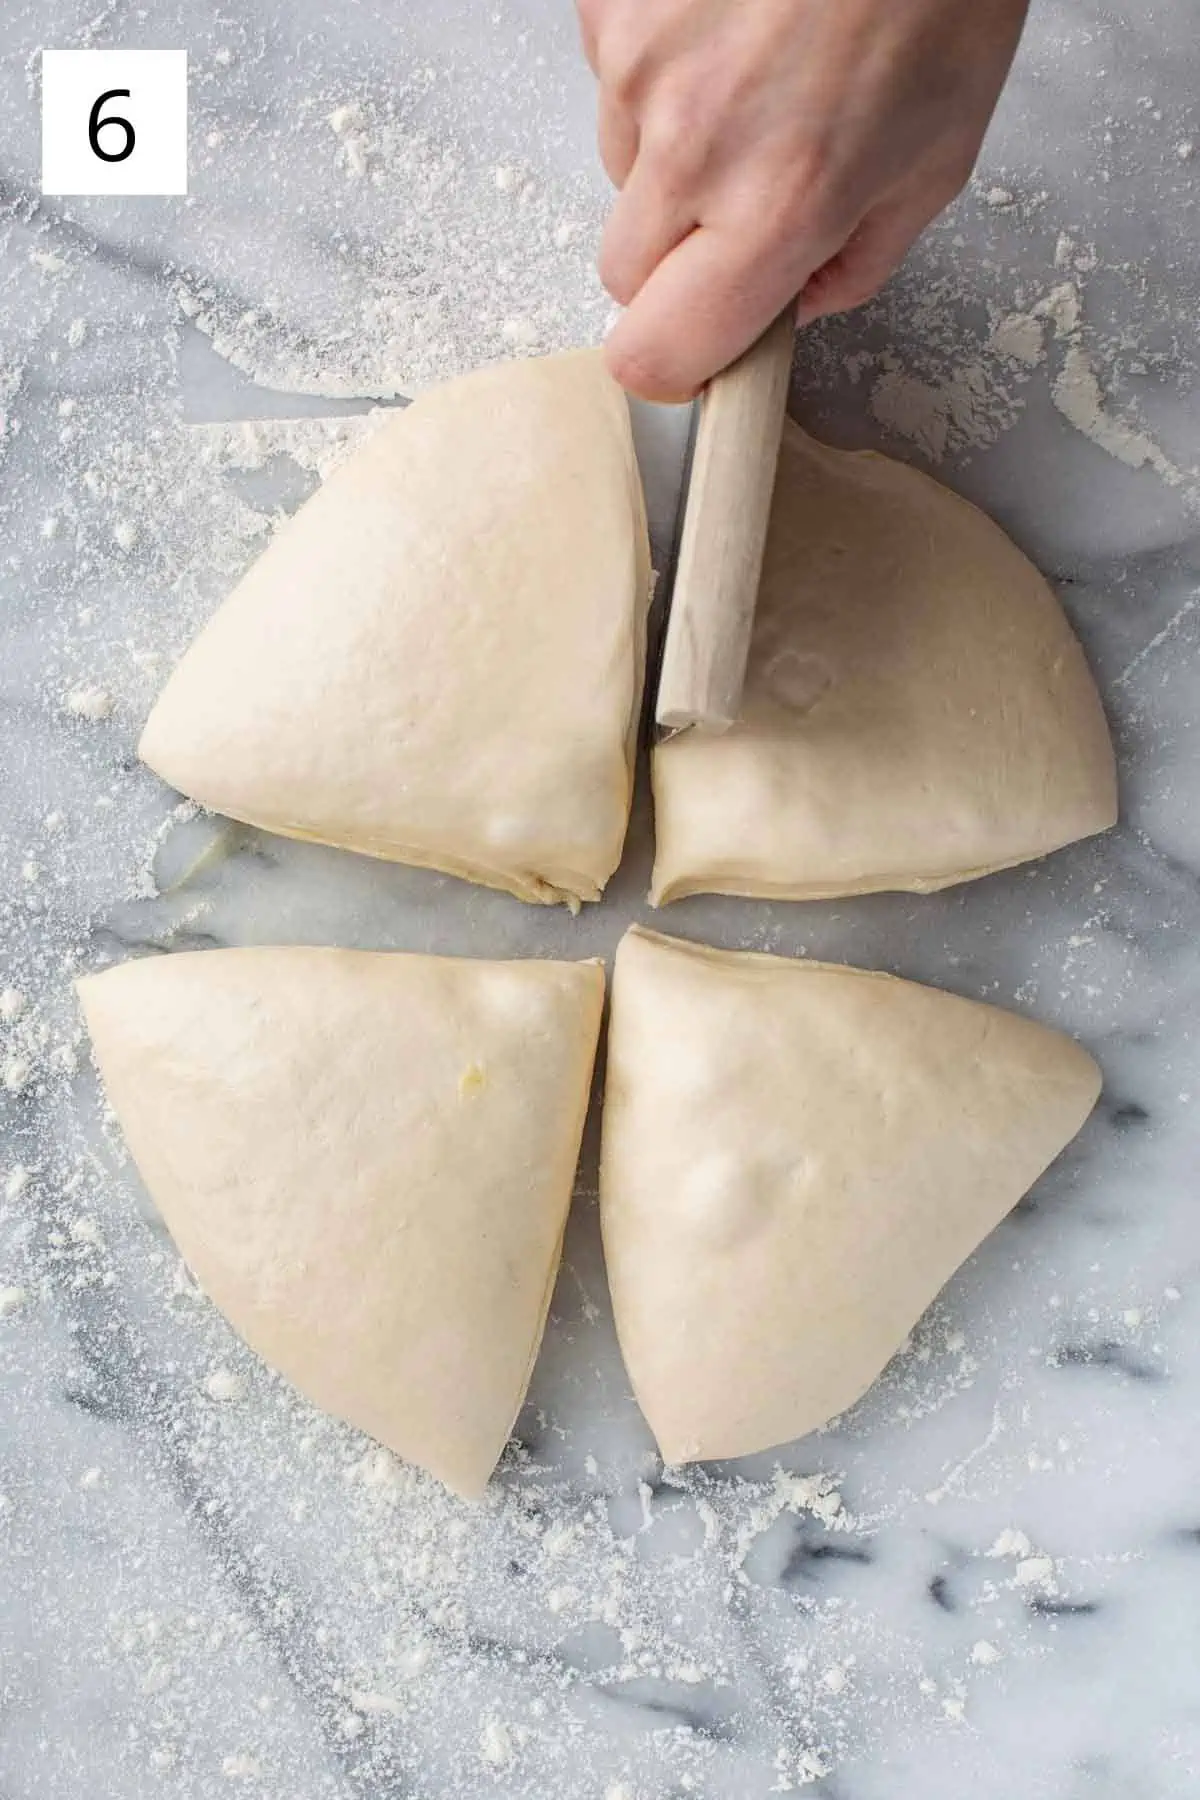 Separating dough into four equal parts.